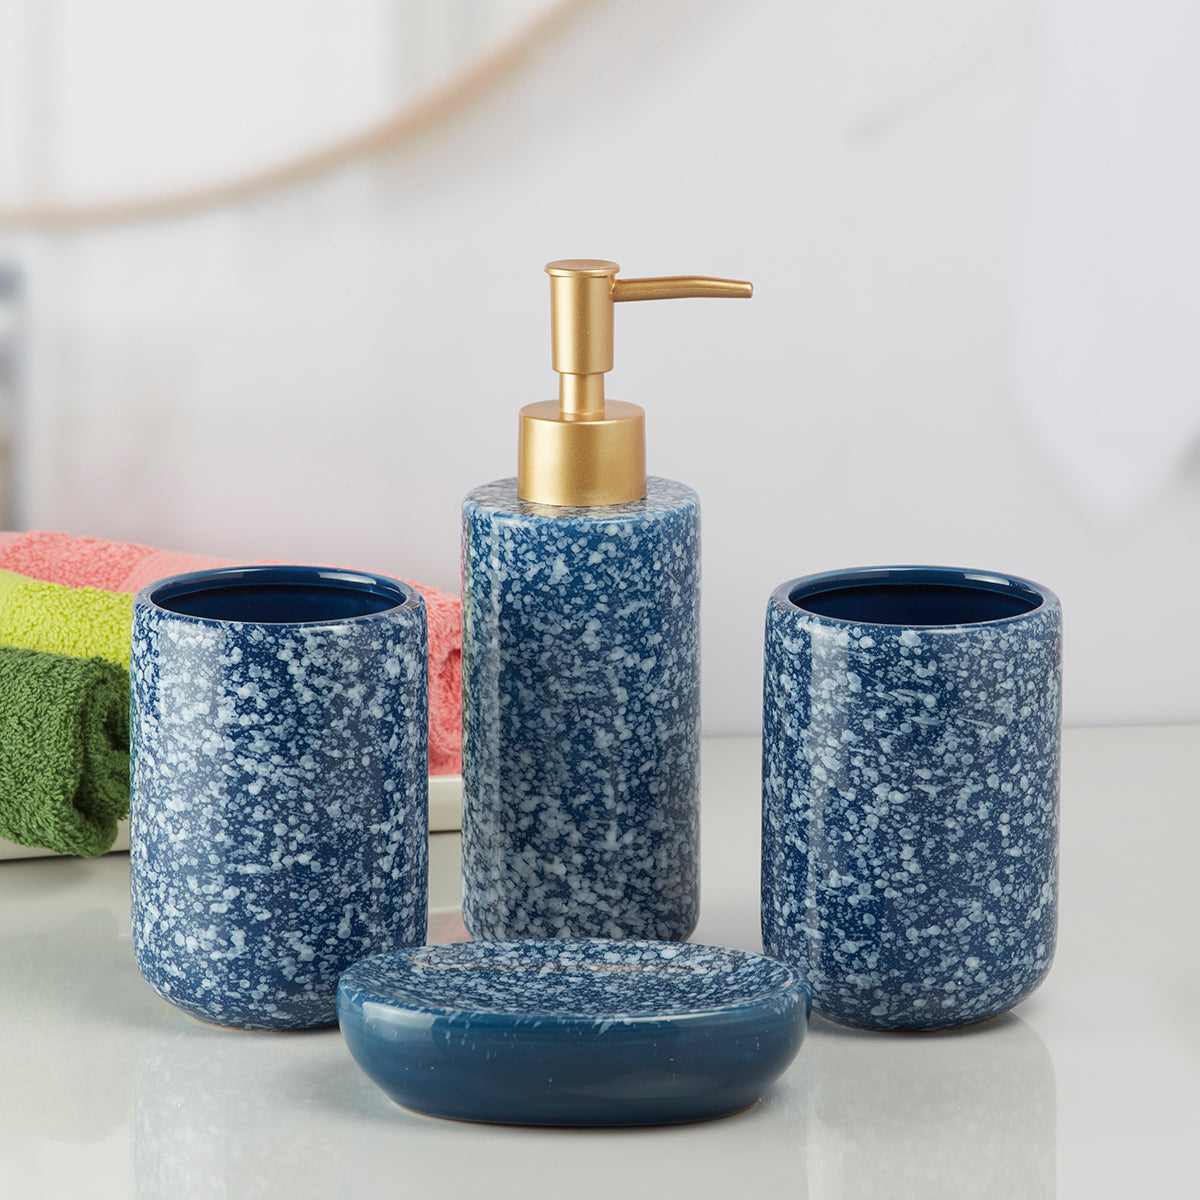 Ceramic Bathroom Accessories Set of 4 Bath Set with Soap Dispenser (9632)